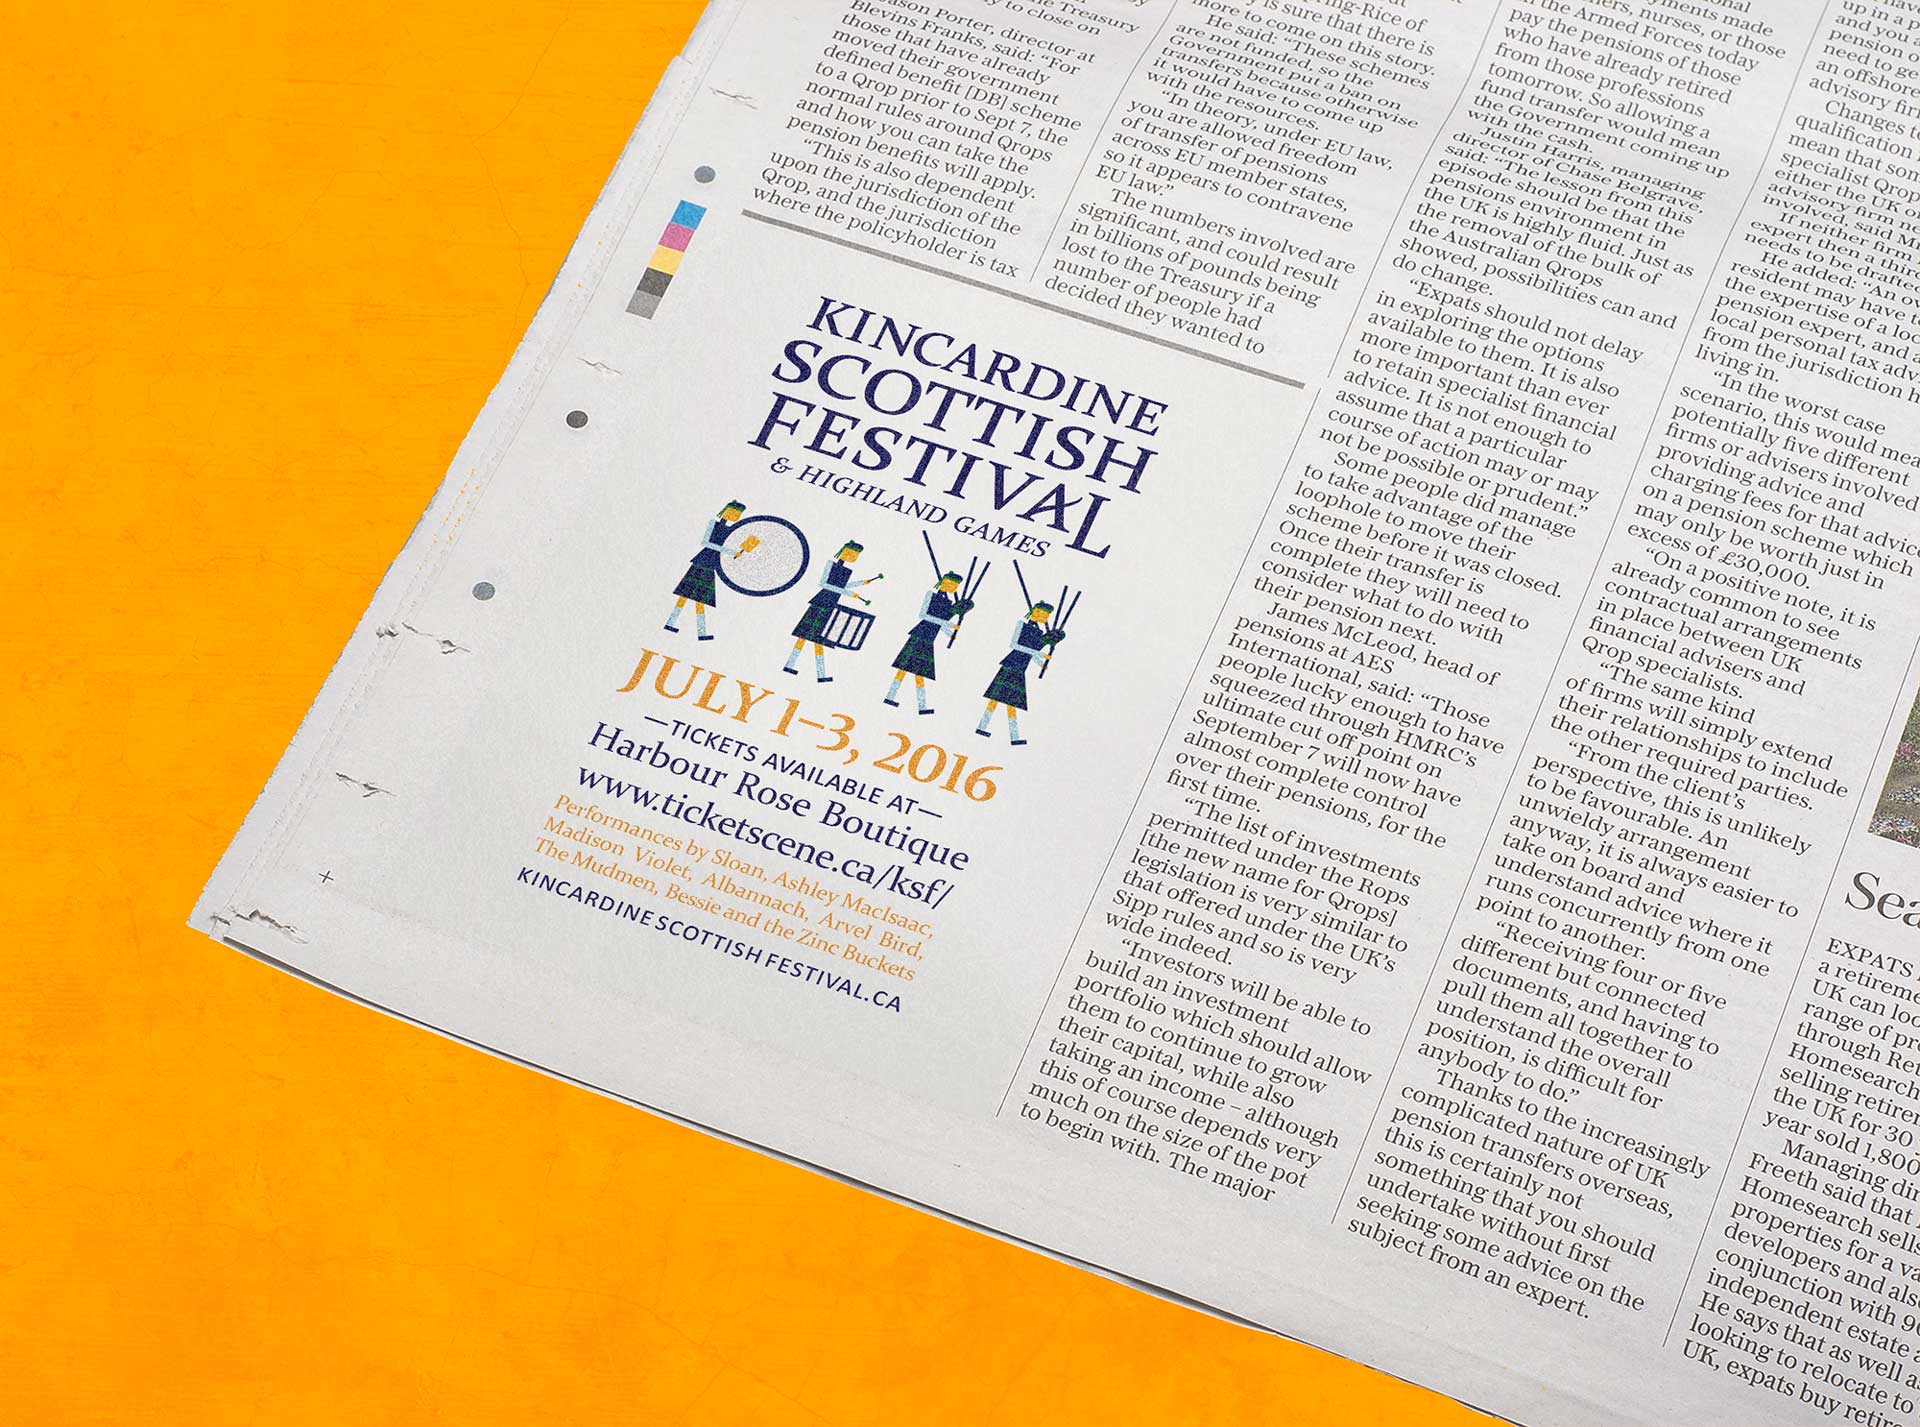 Newspaper ad for the Kincardine Scottish Festival